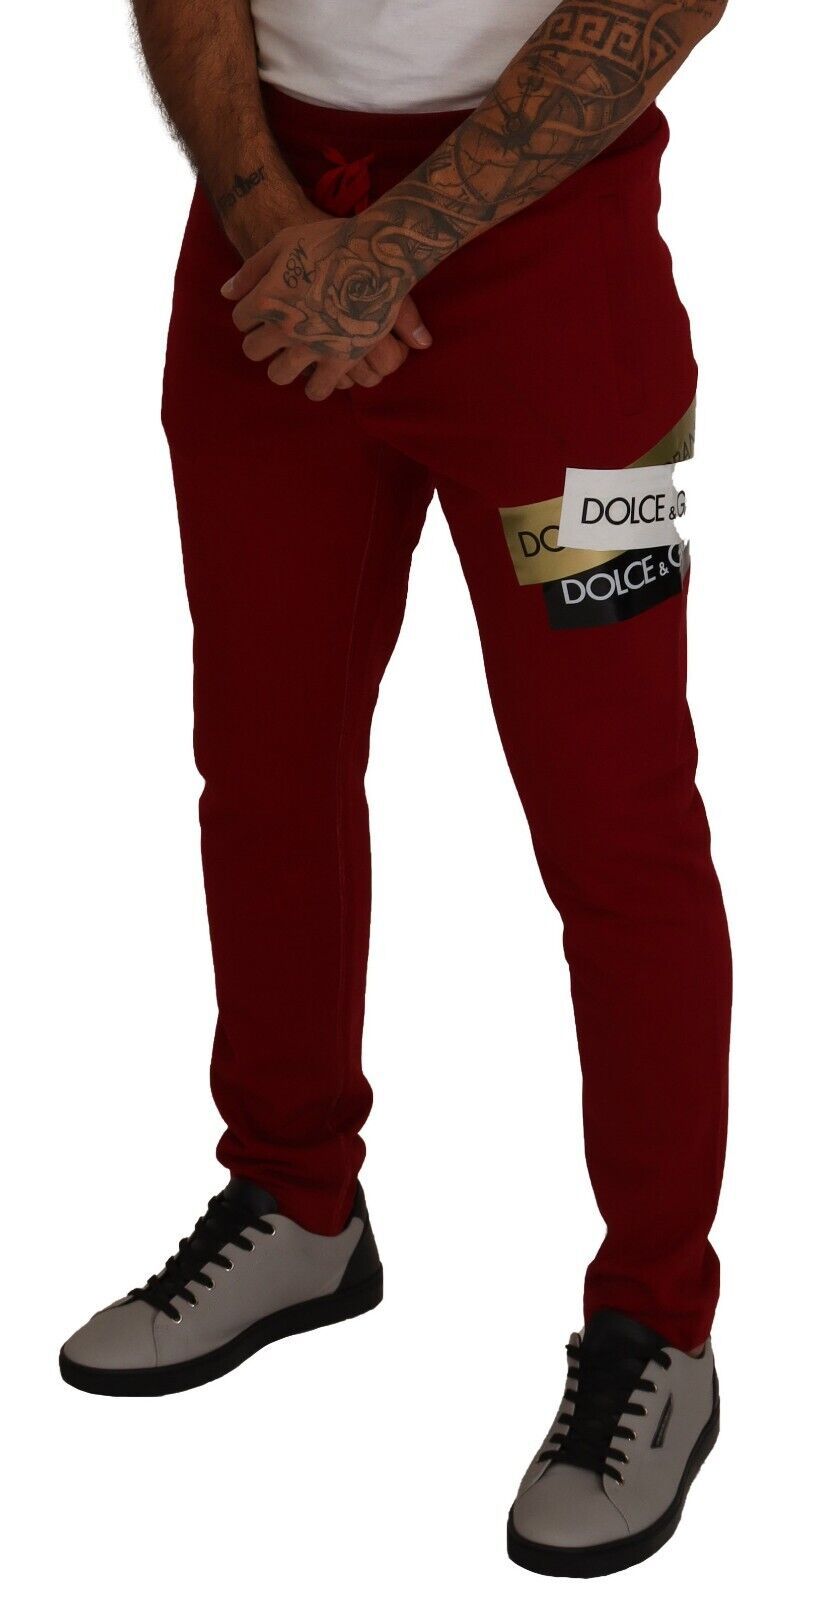 Dolce & Gabbana Elegant Red Jogging Pants with Drawstring Closure